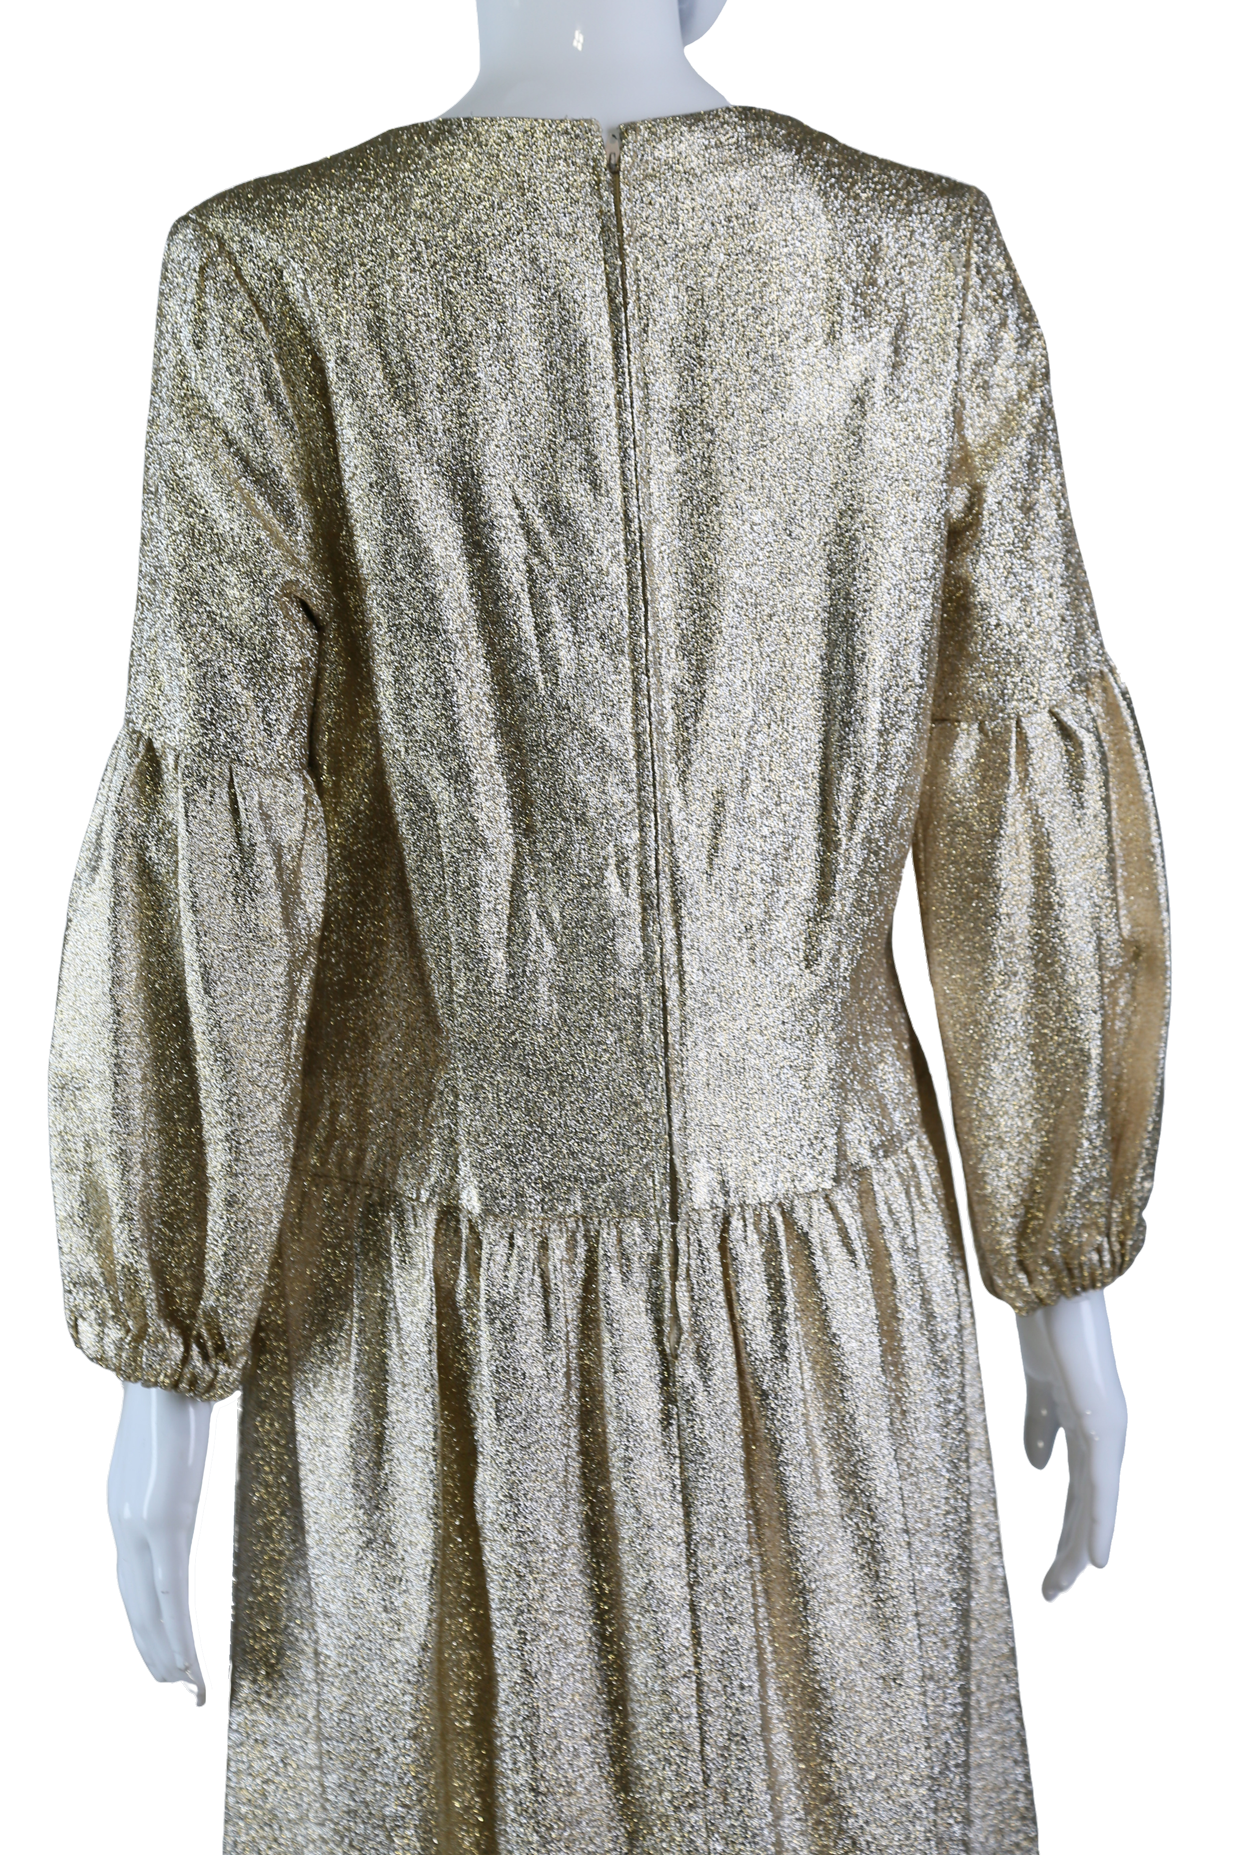 Gold Lamé Puff Sleeve Dress - Embers / Cinders Vintage